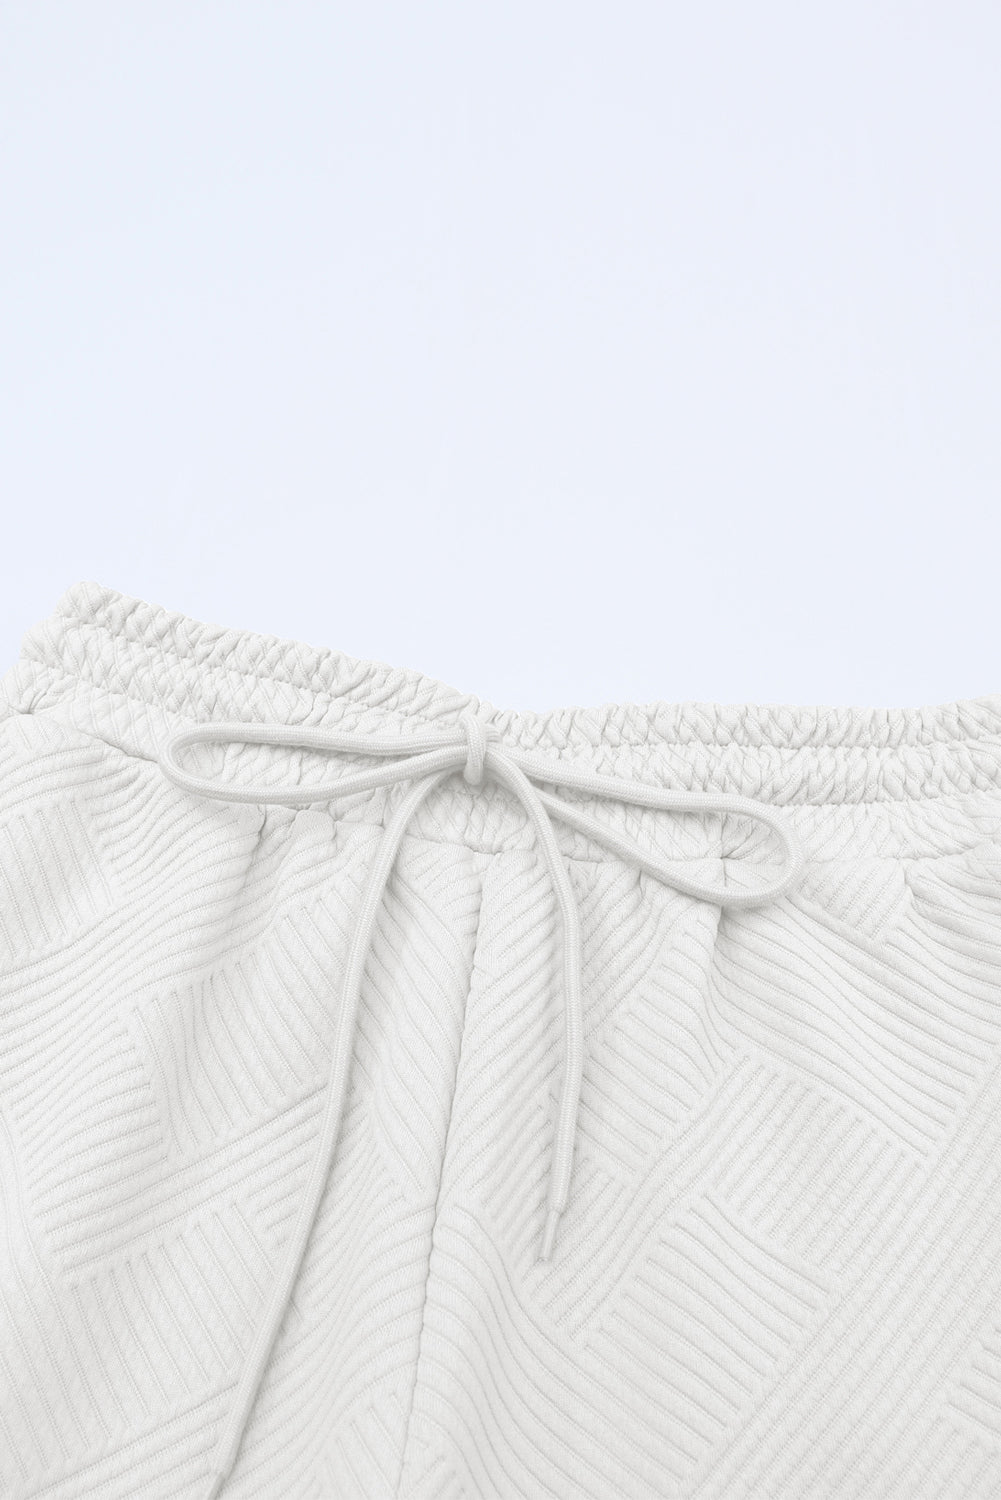 Stylish White Women's T-Shirt & Pants Set - Relaxed Fit